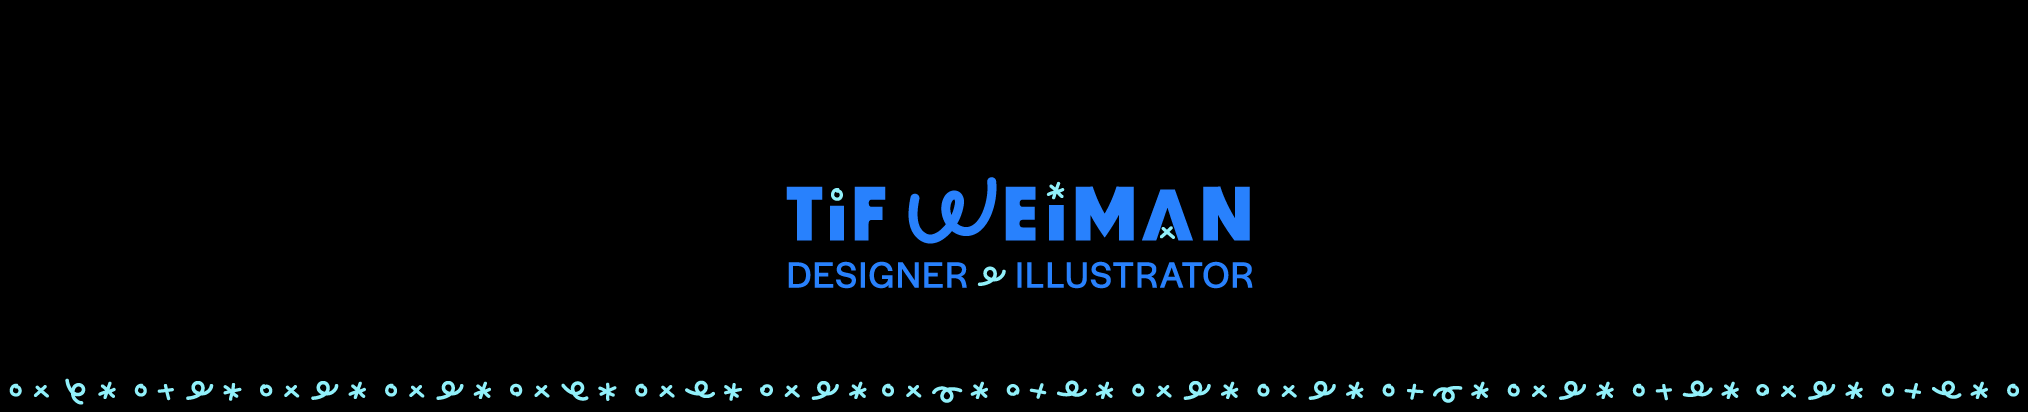 Banner profilu uživatele Tif Weiman